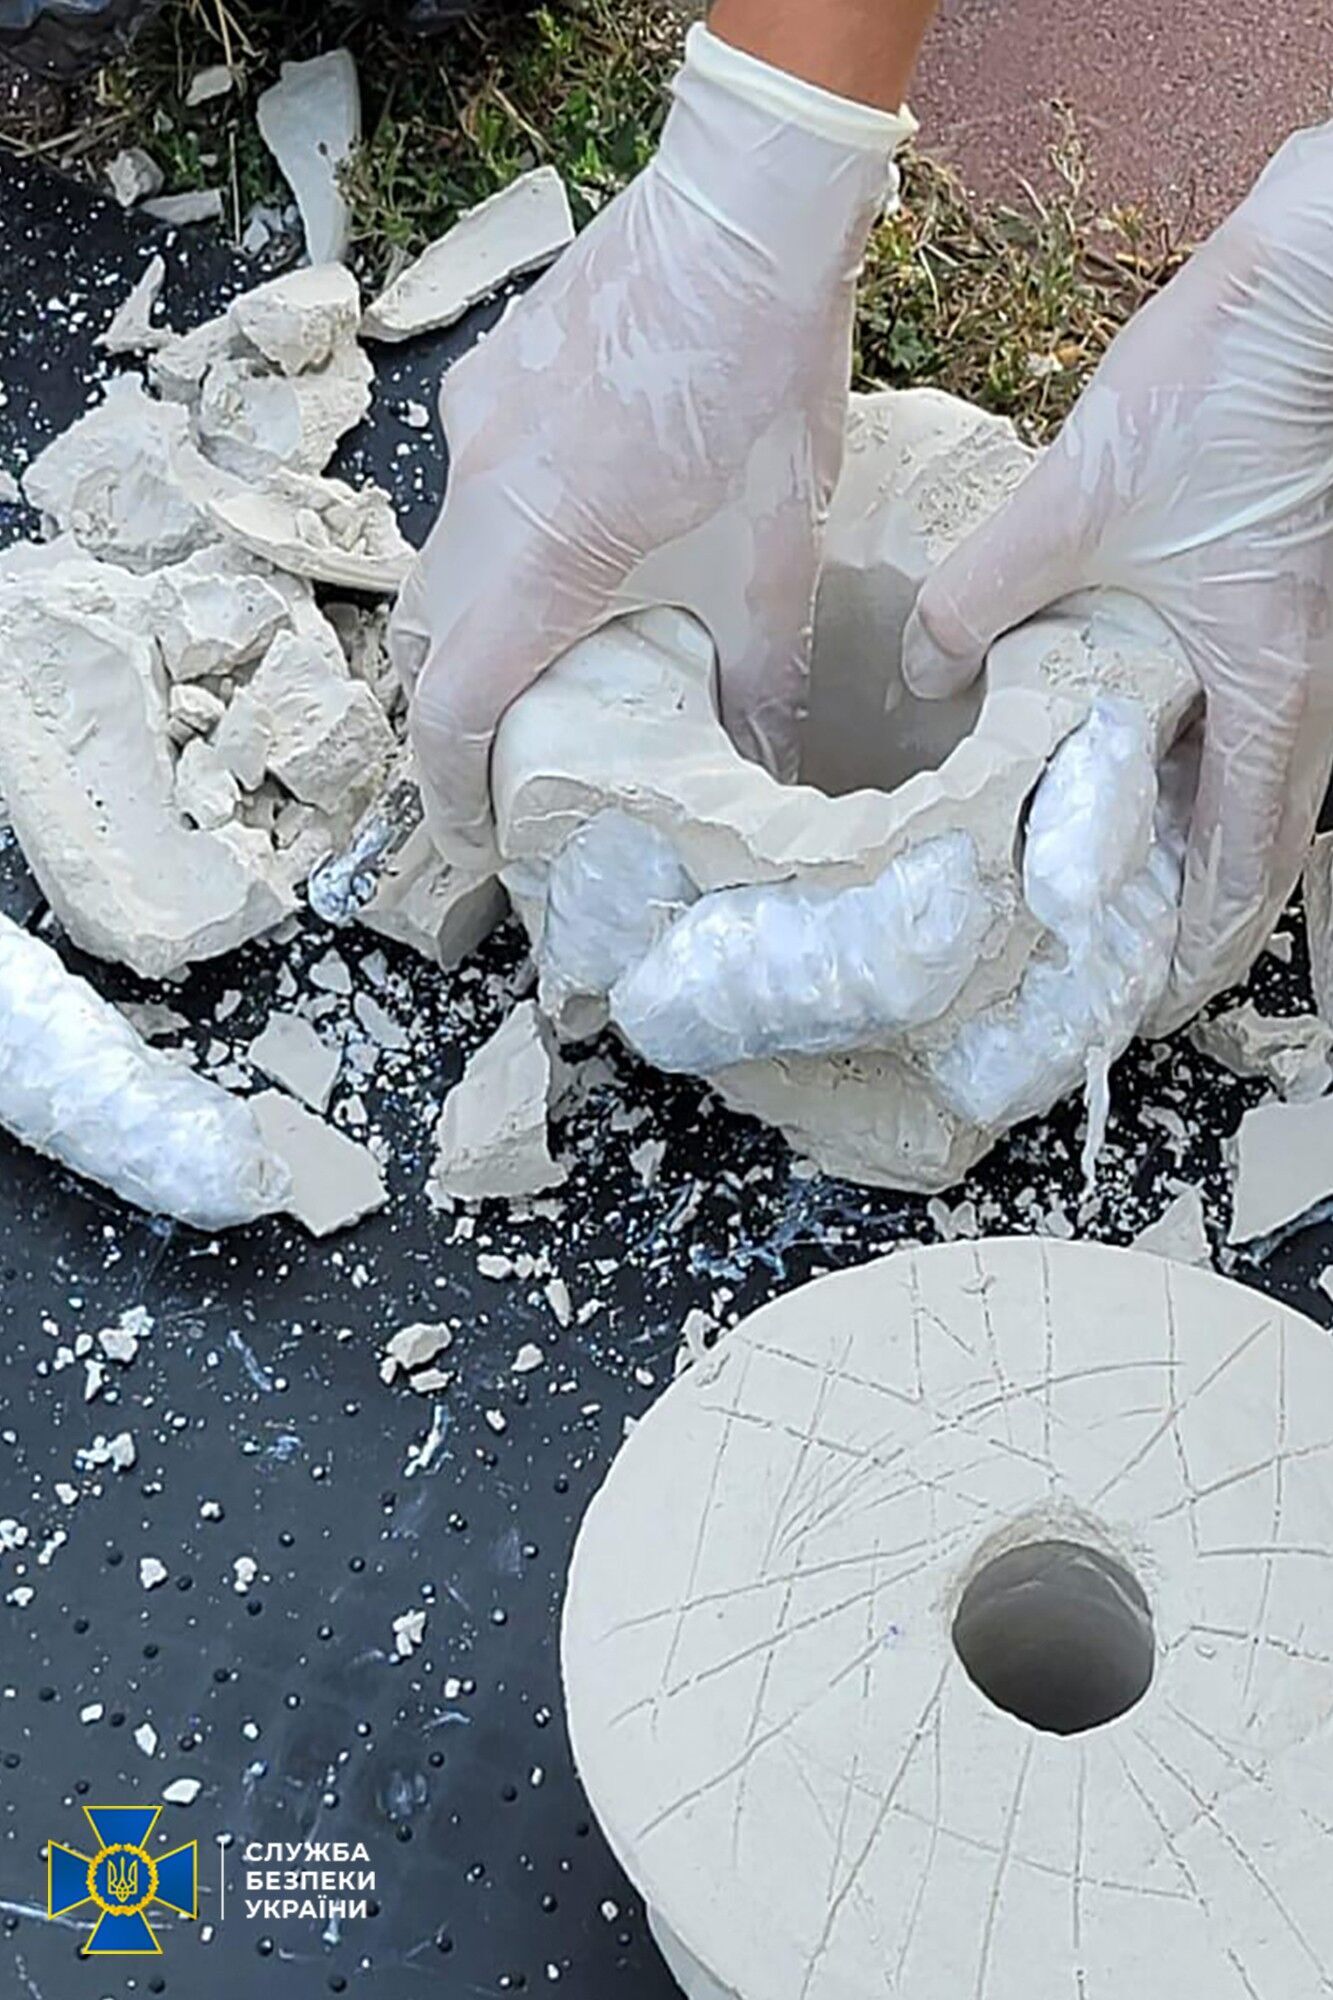 Наркотики прятали в кувшинах и садовых скульптурах.